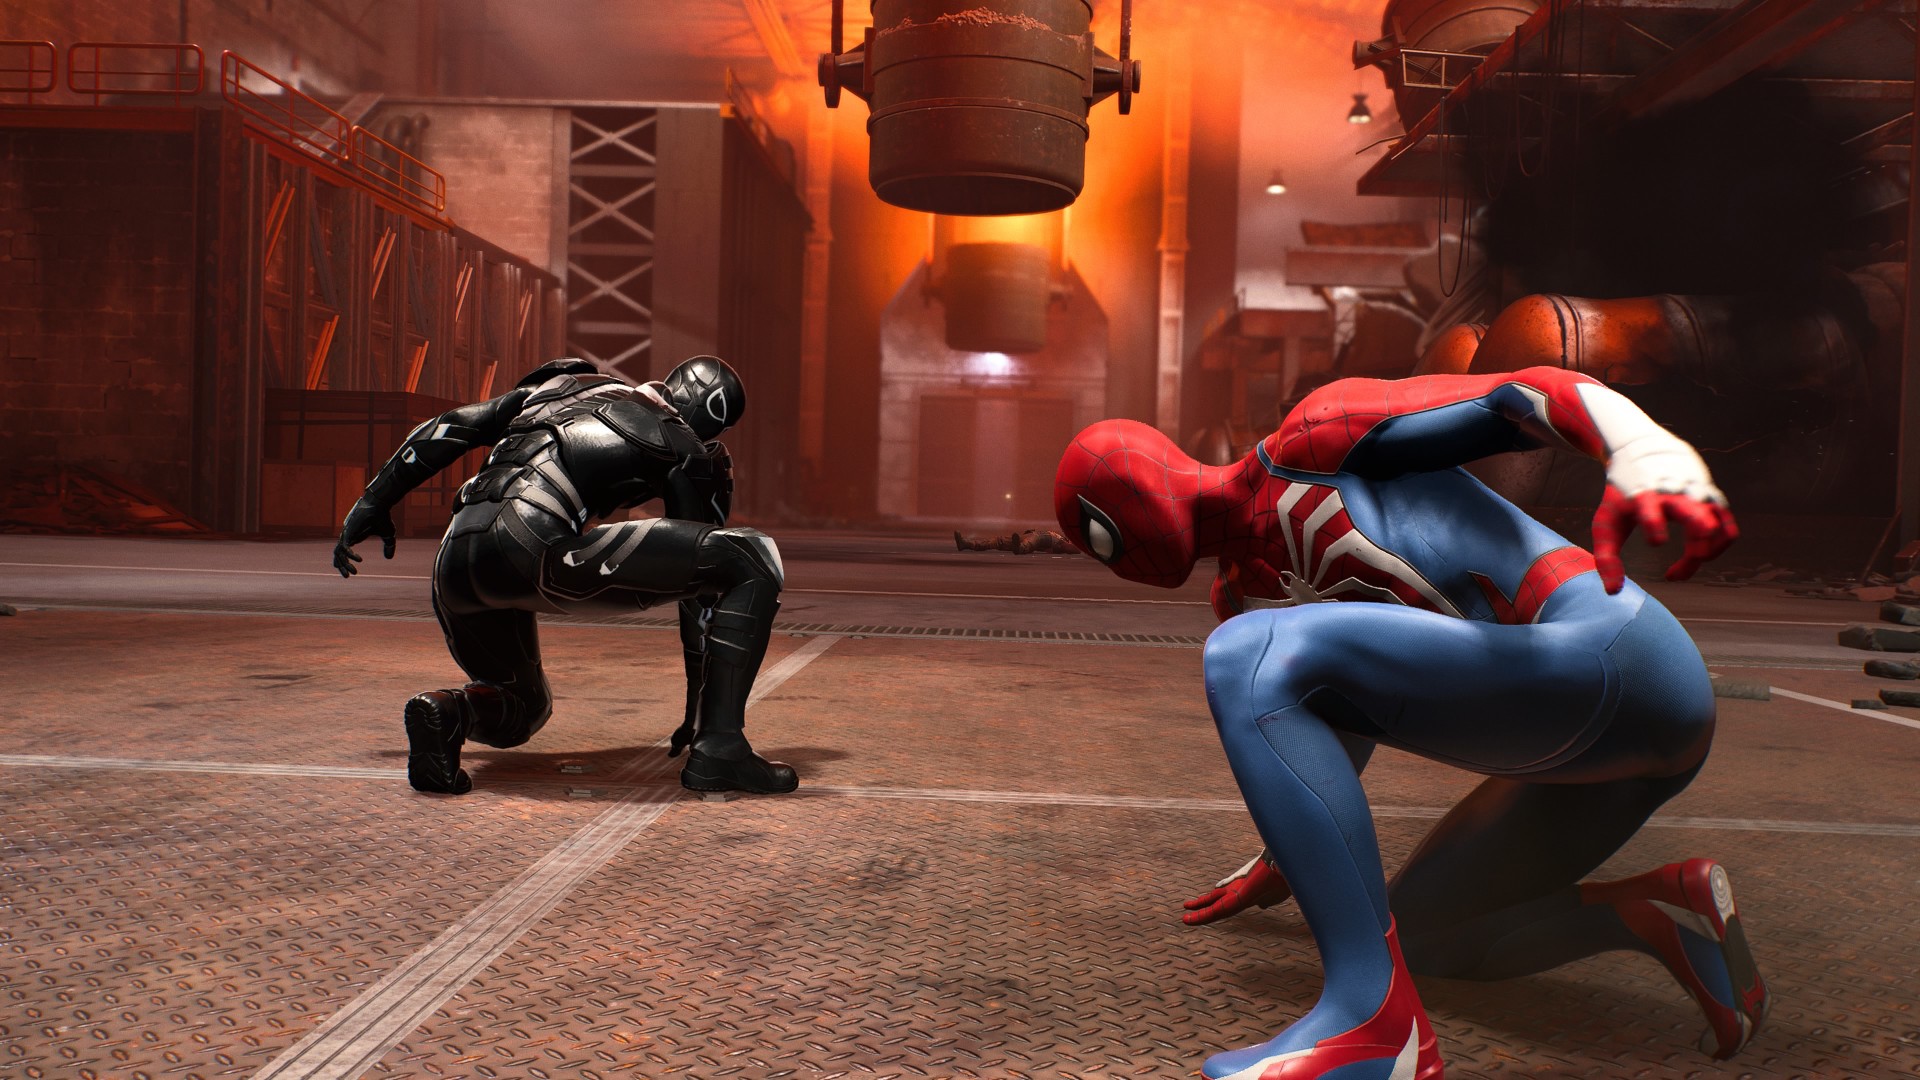 Marvel's Spider-Man 2 gets a release date - GadgetMatch